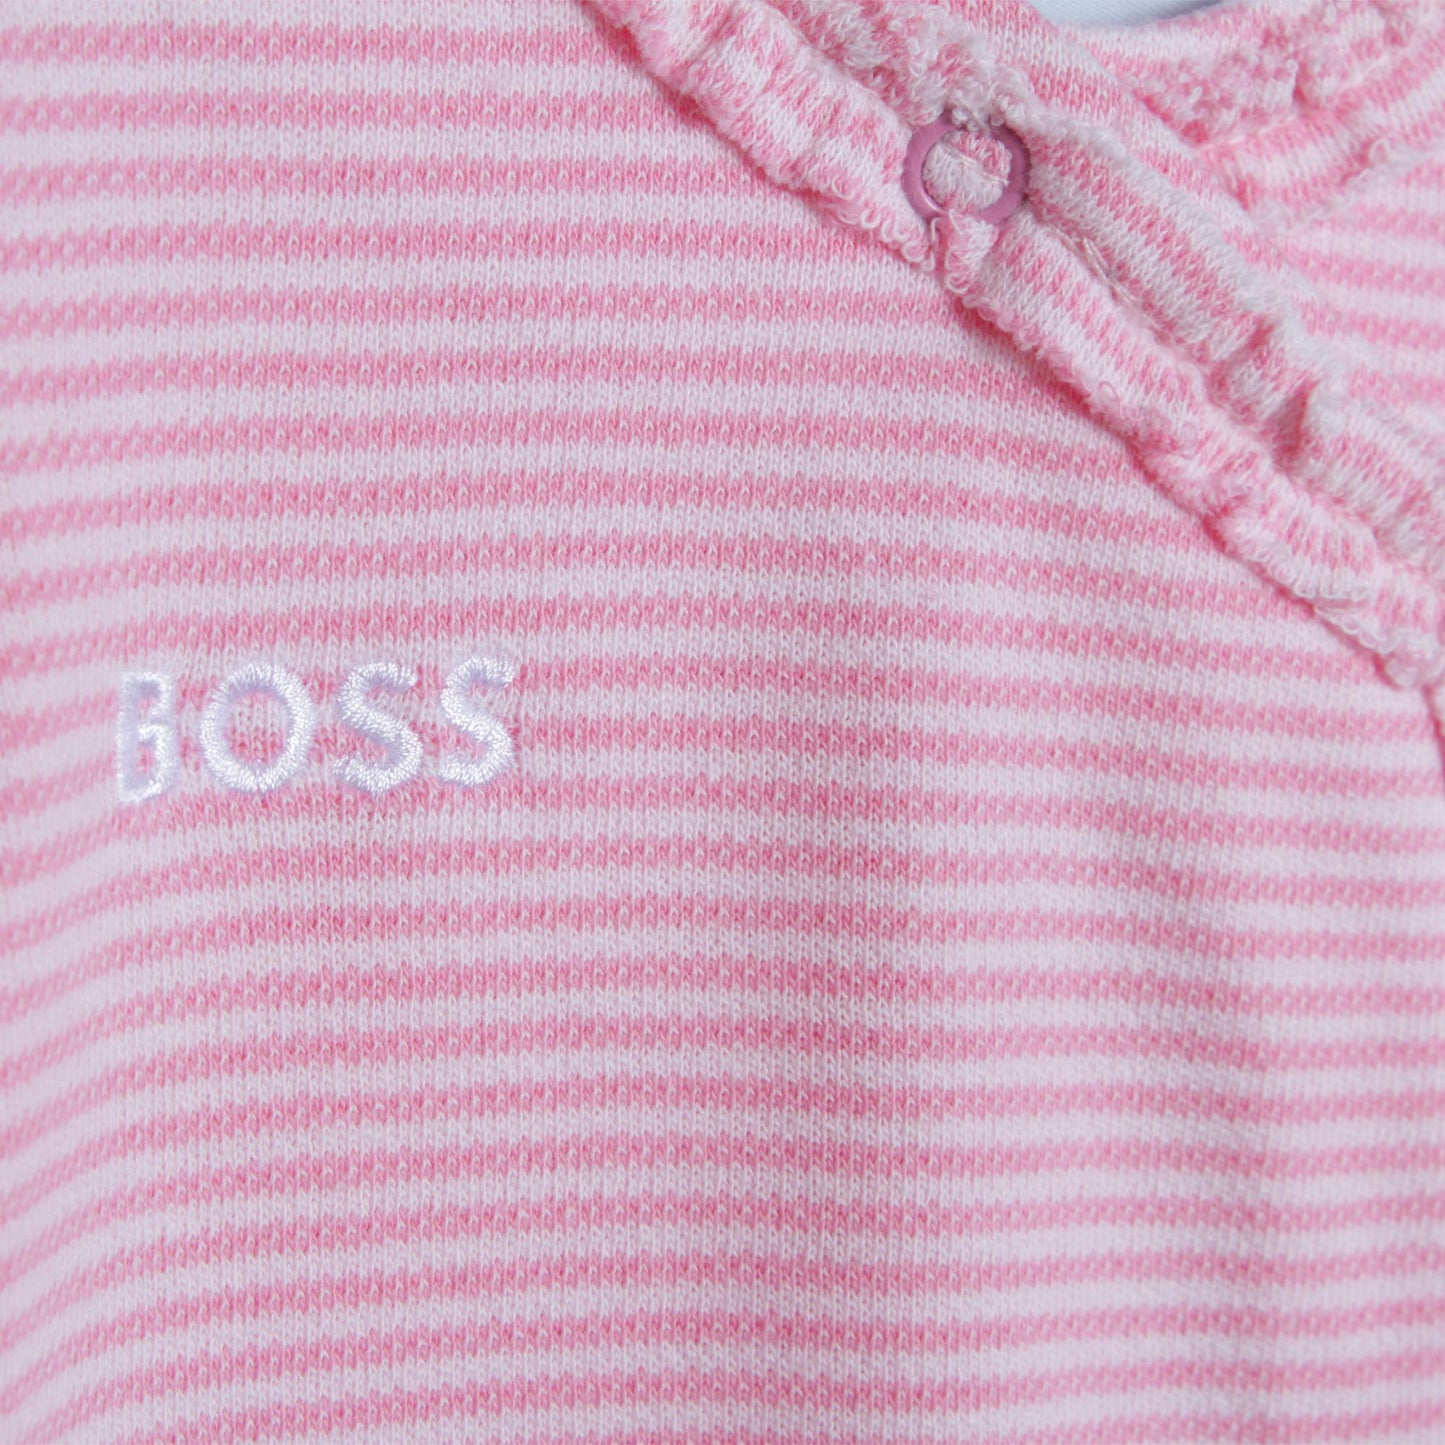 BOSS Baby Girls Pink Logo Pyjamas